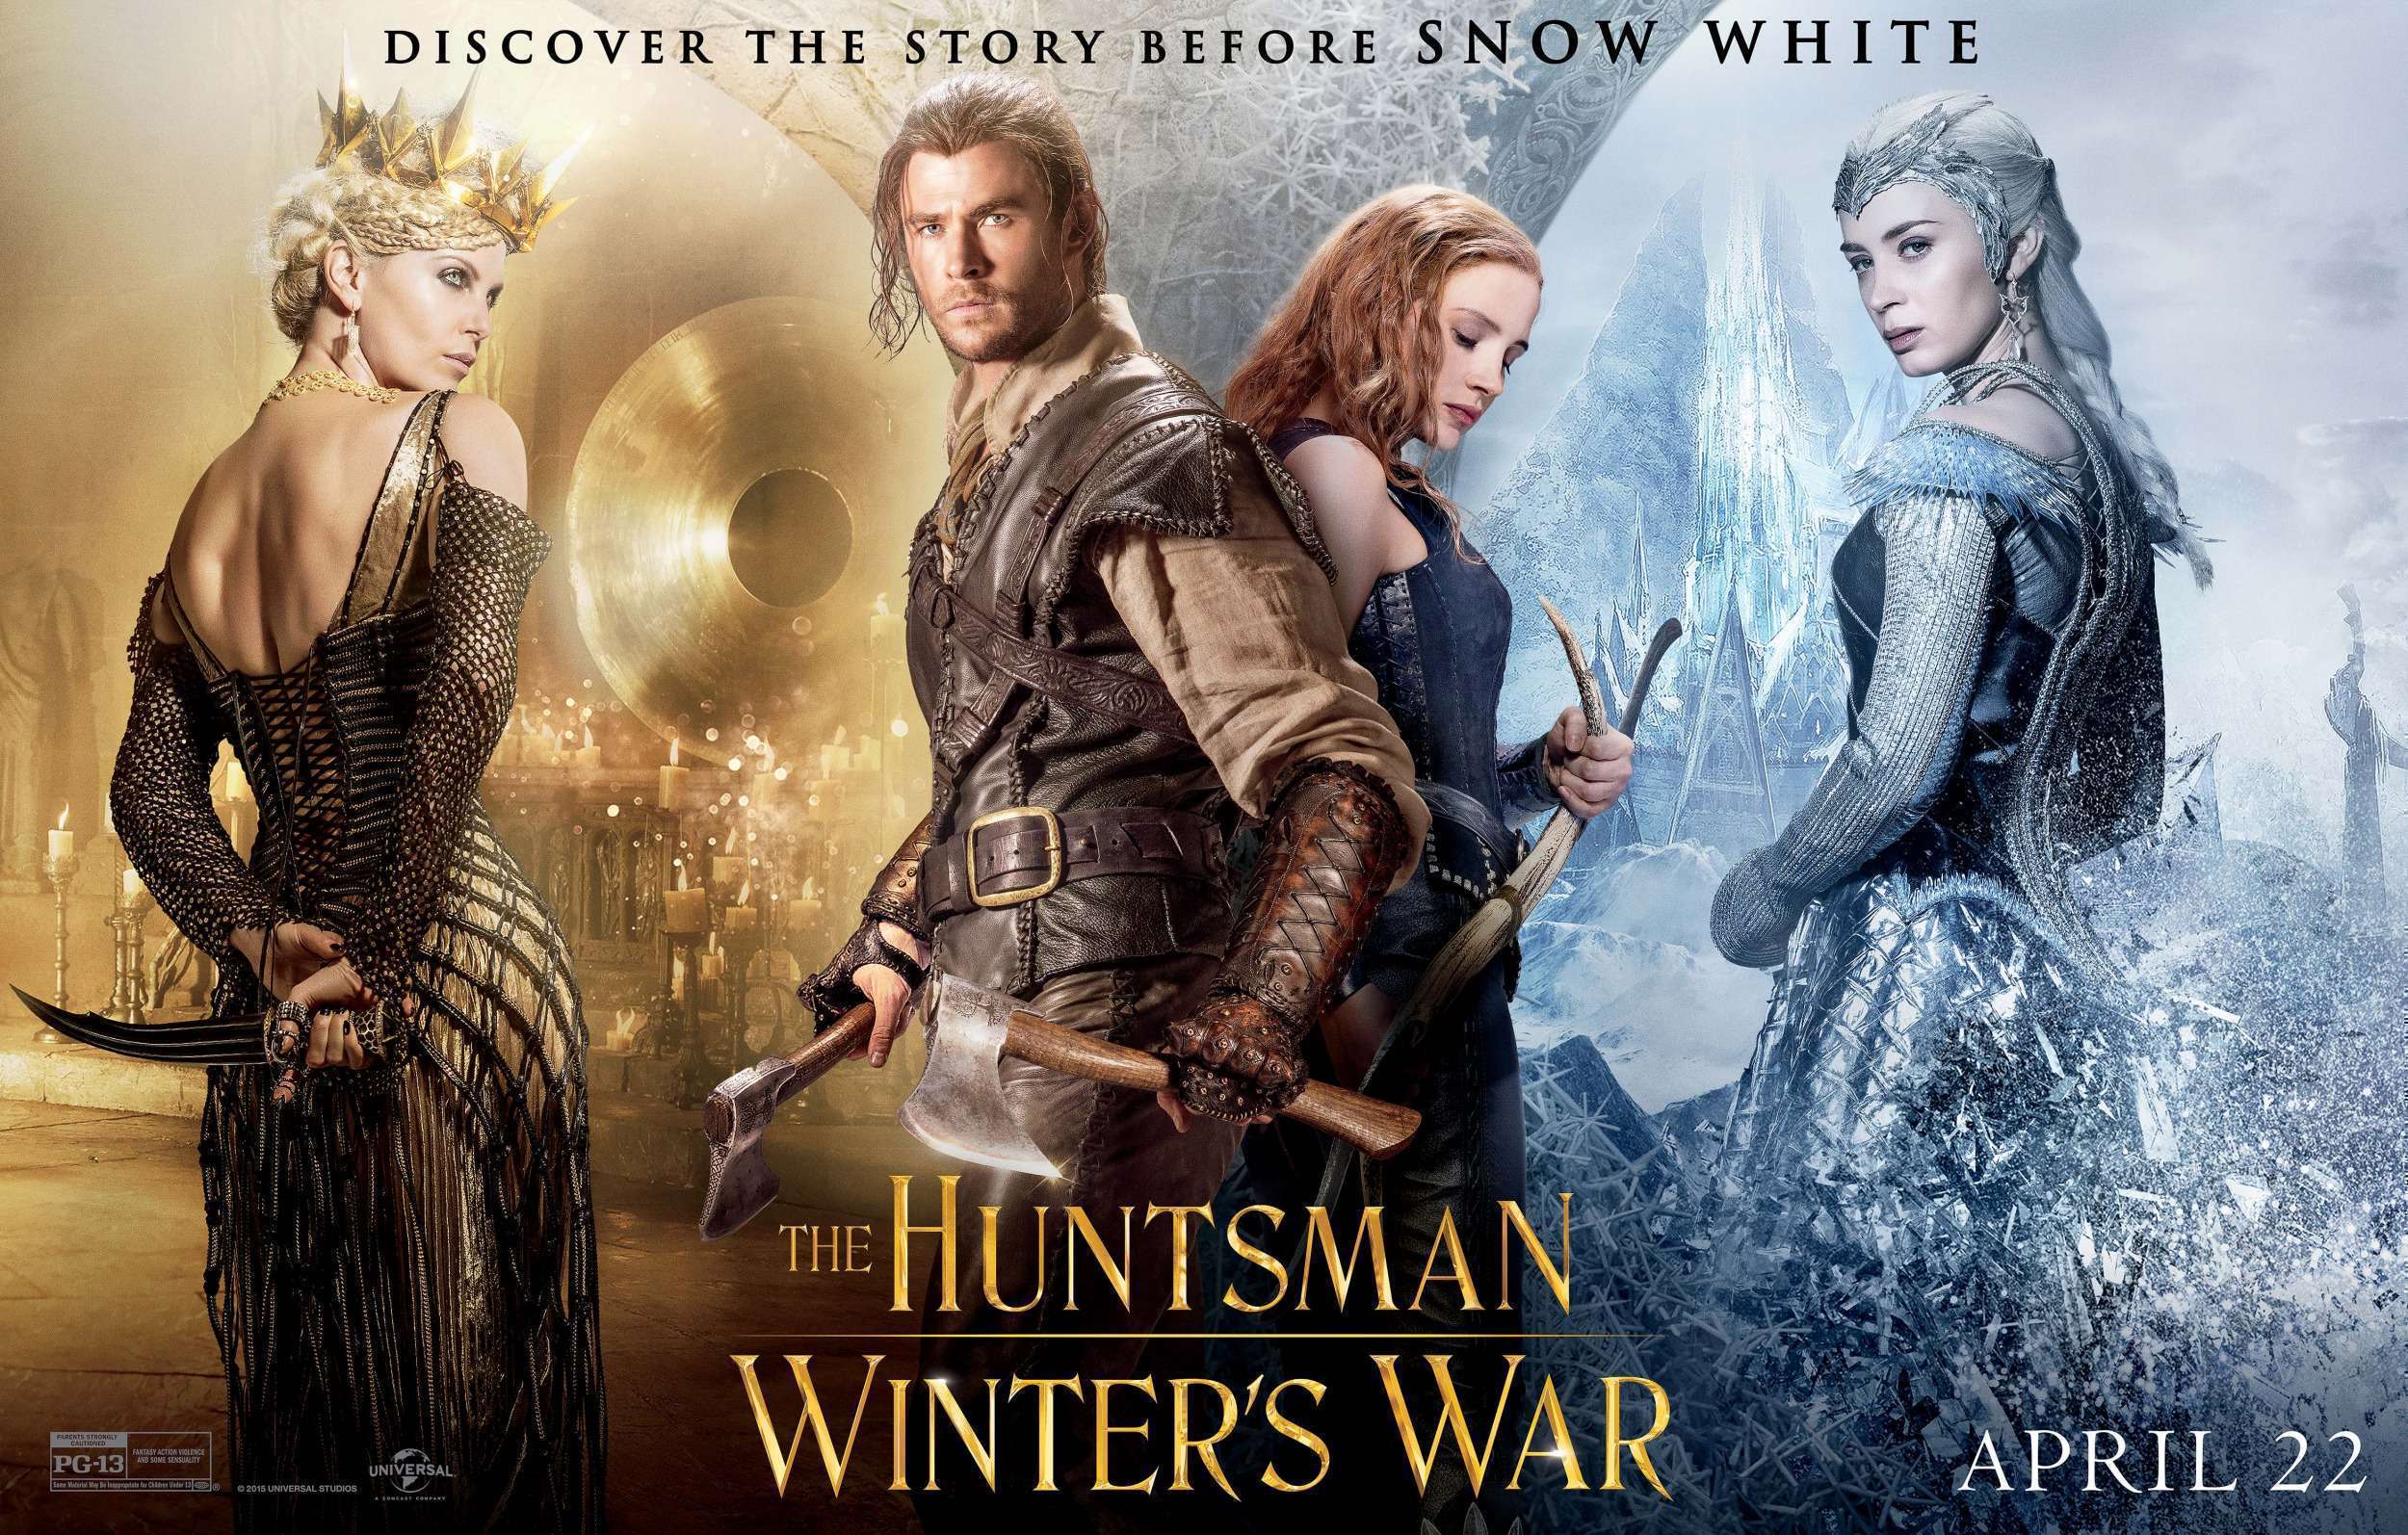 The Huntsman Winters War poster